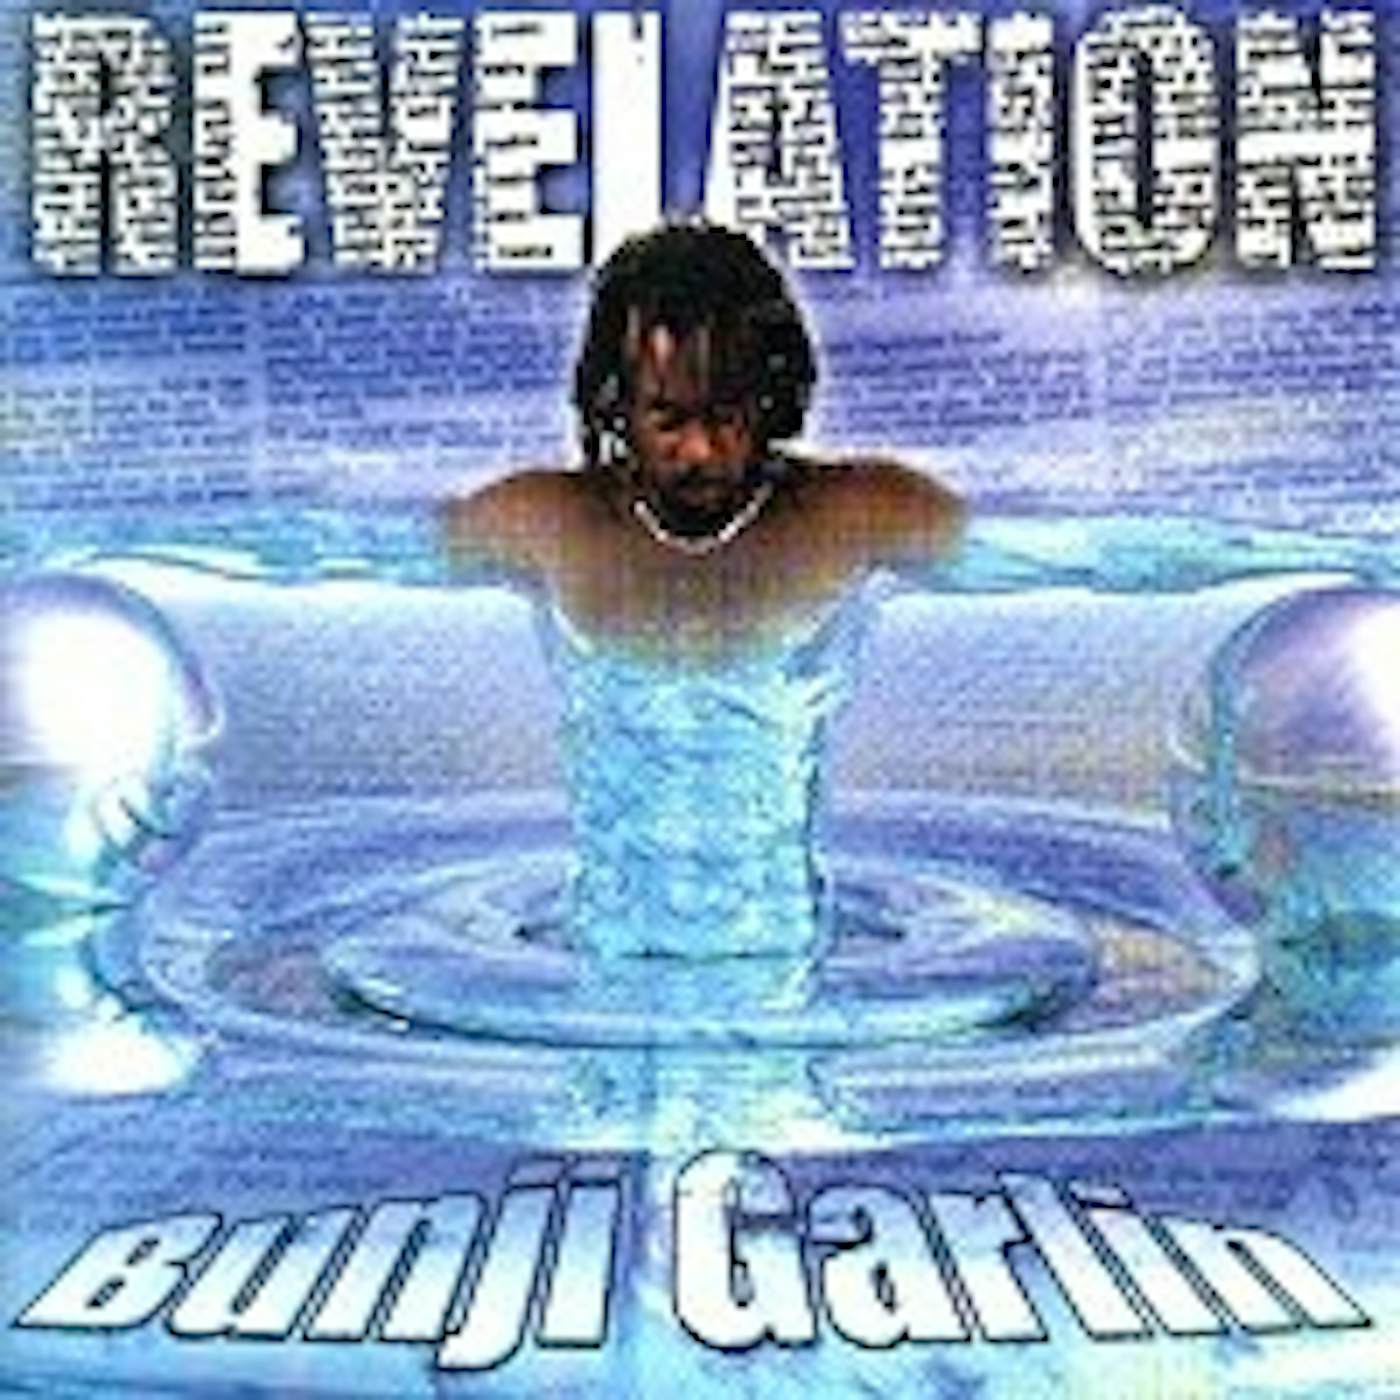 Bunji Garlin Revelation Vinyl Record